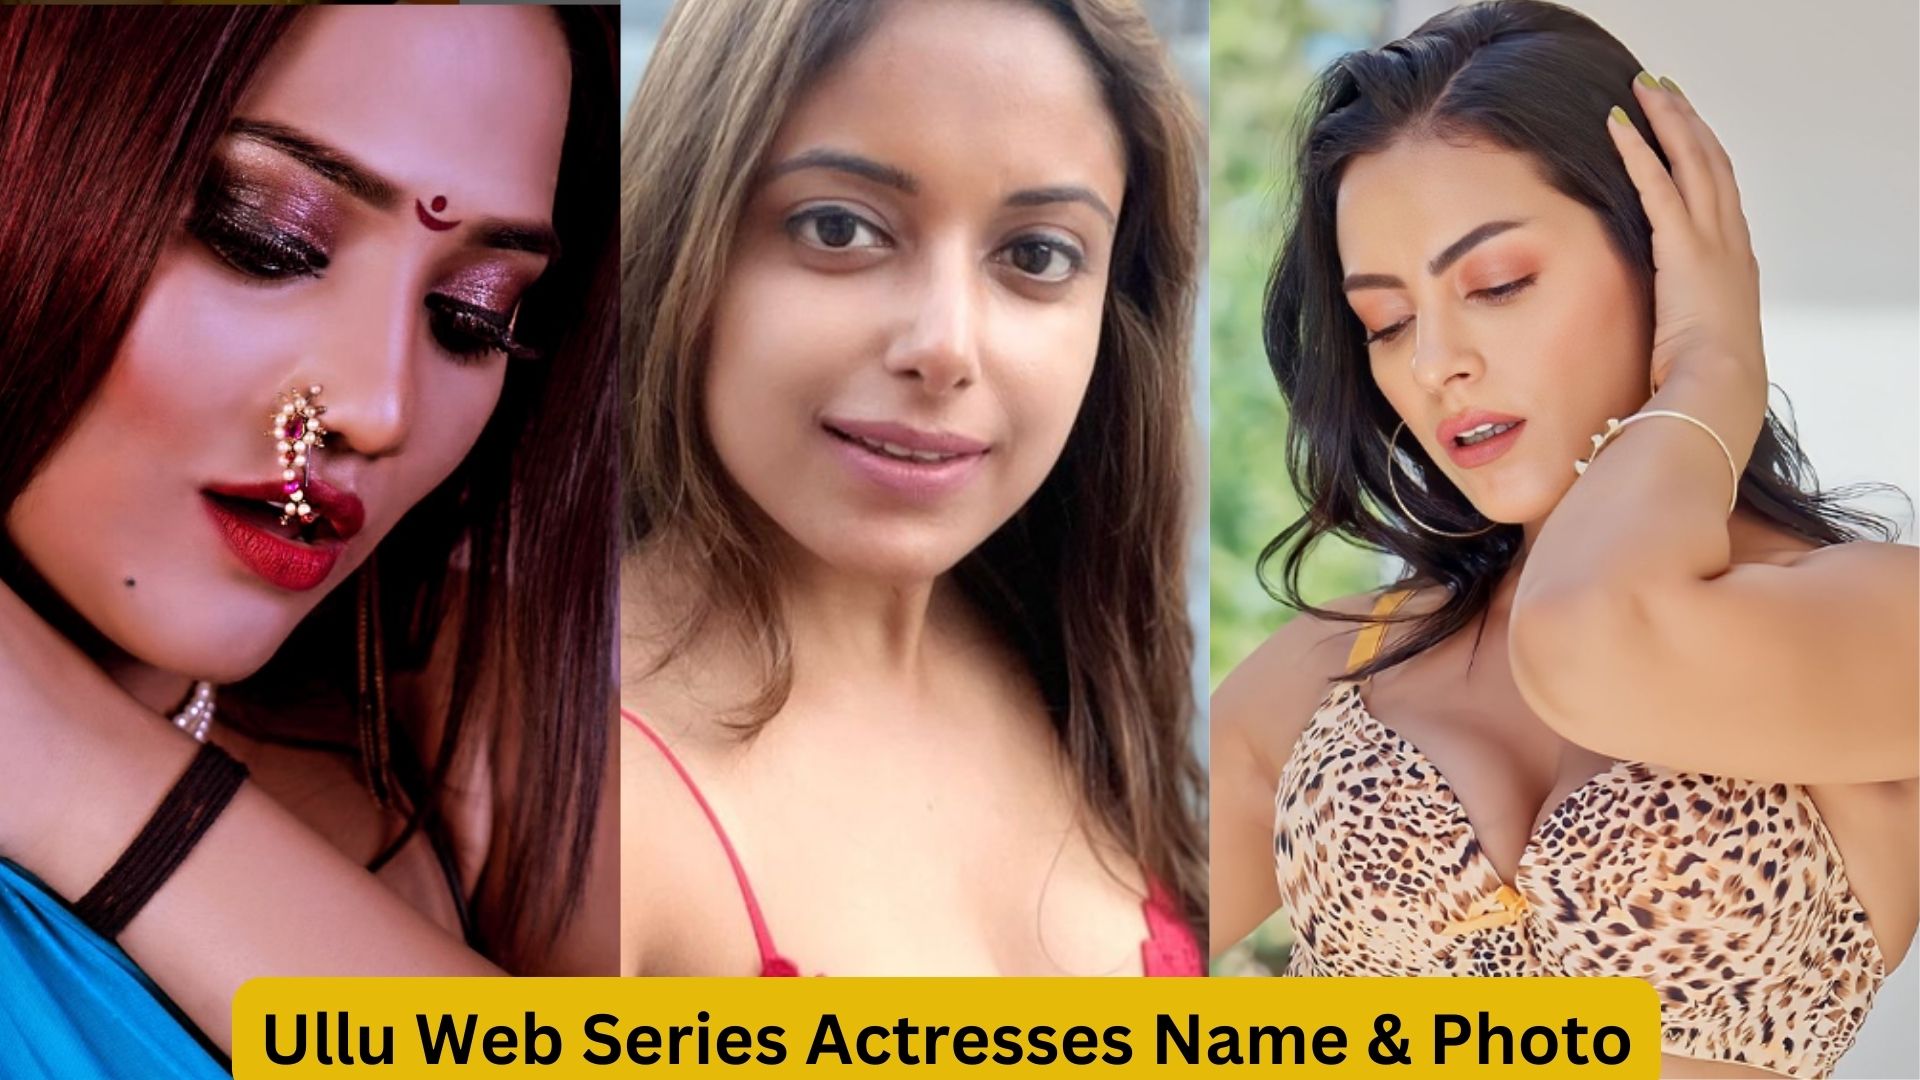 Ullu Web Series Actresses Name